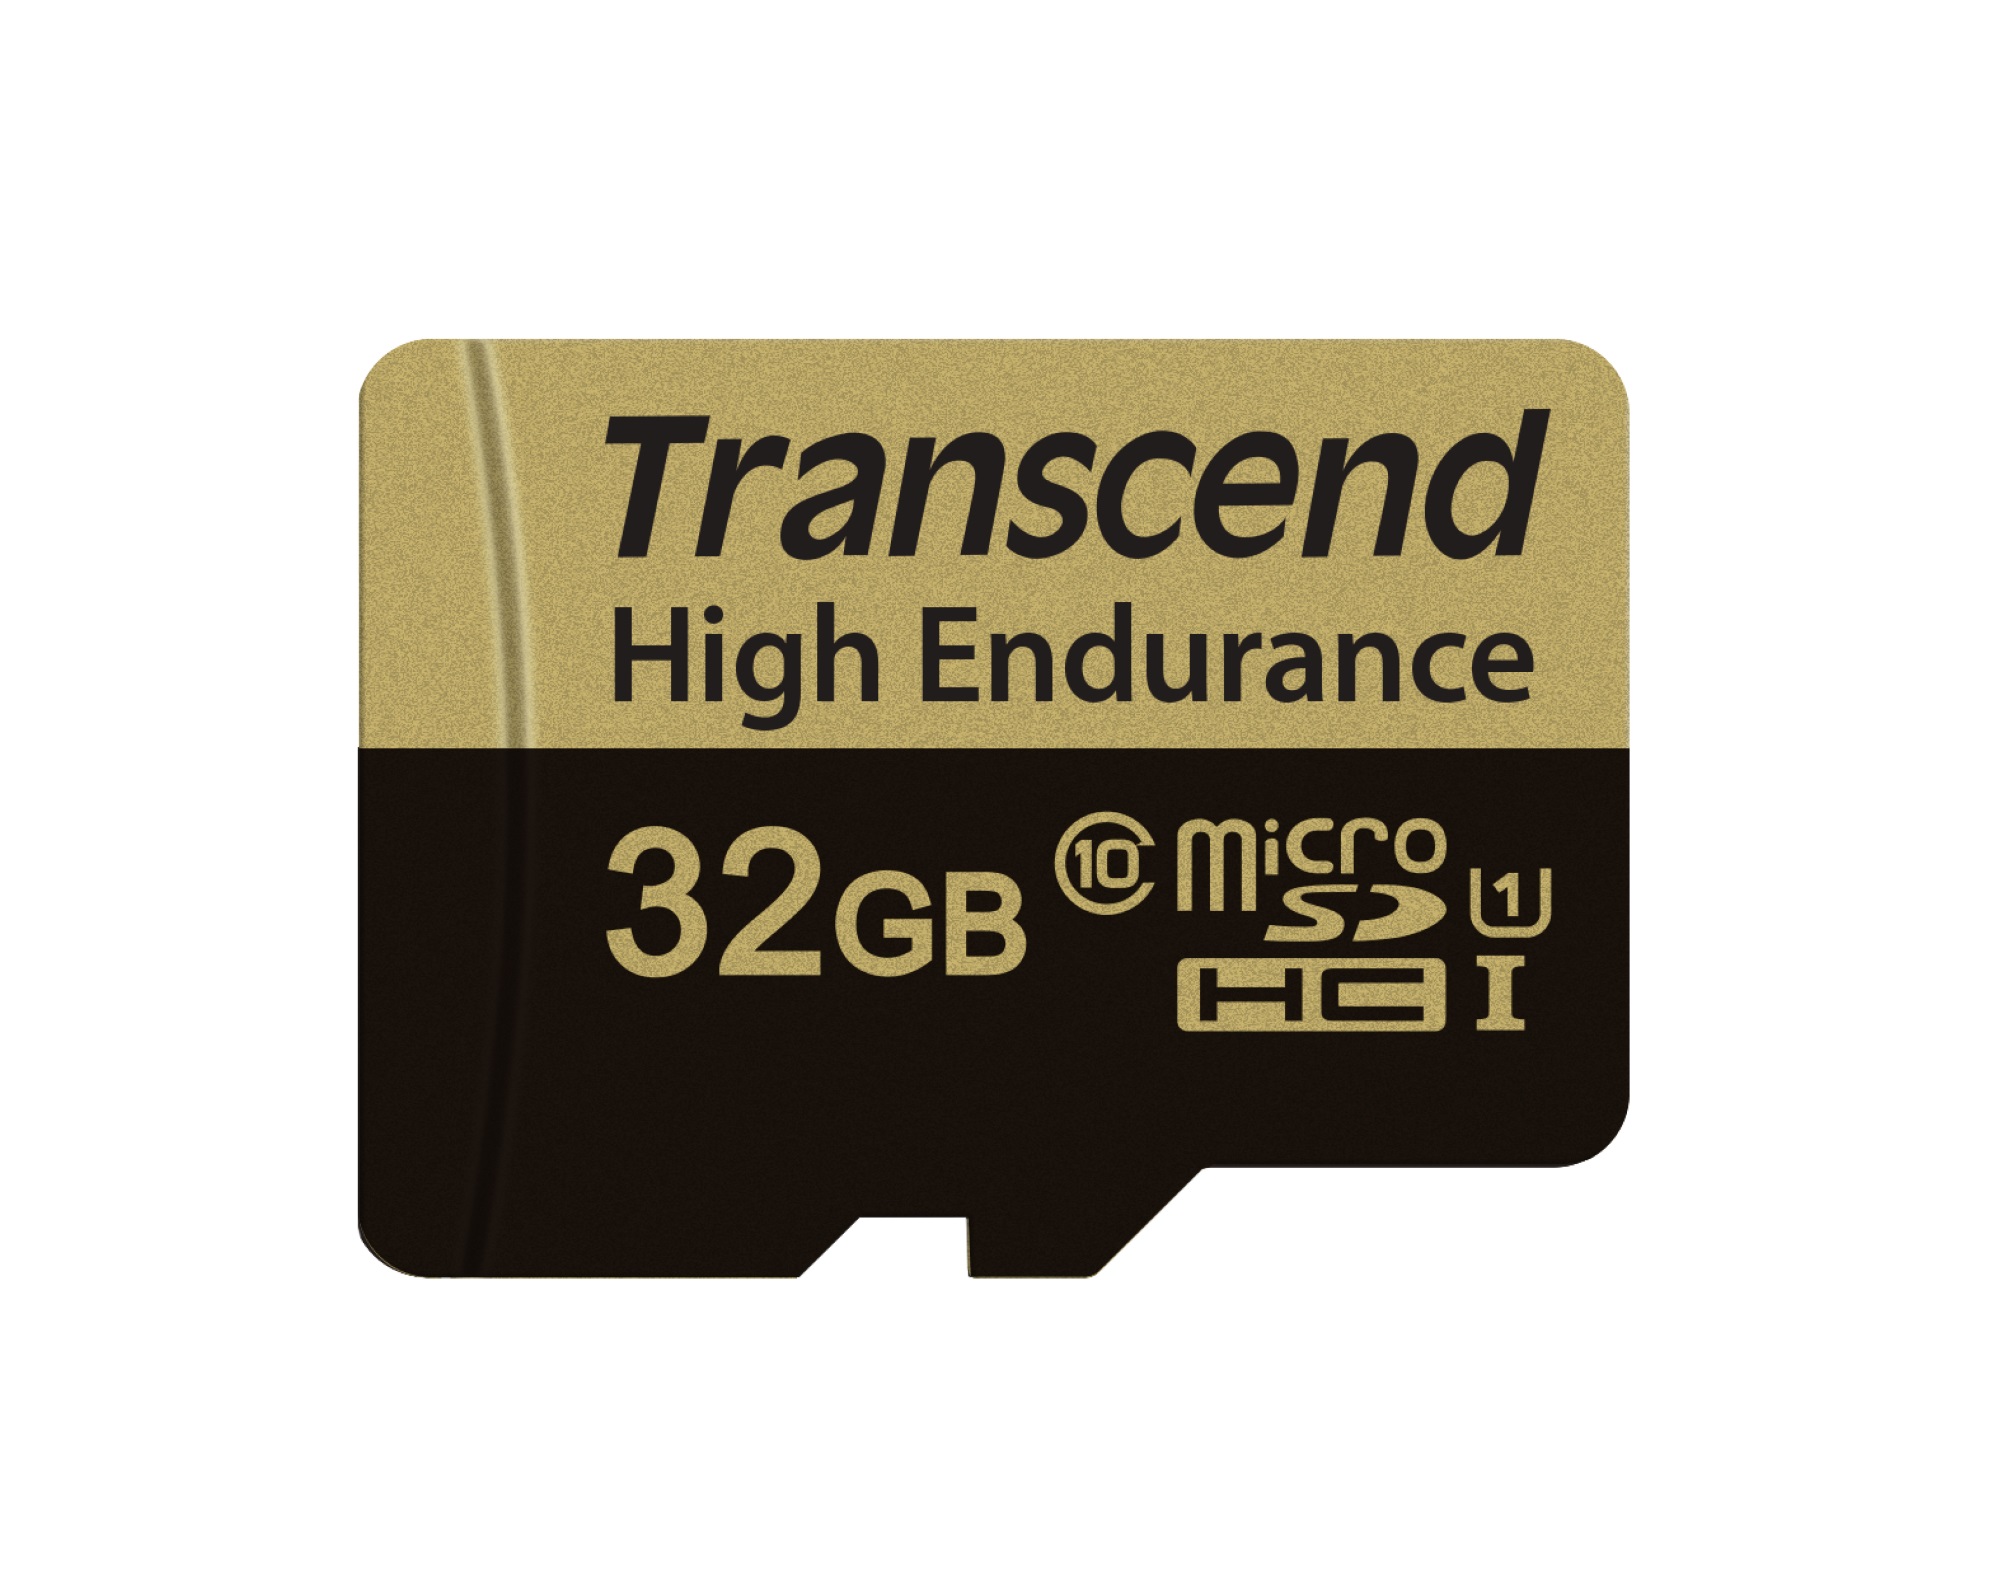 grafisk sennep deadlock 32GB Transcend High Endurance MicroSDHC Card CL10 w/SD Adapter